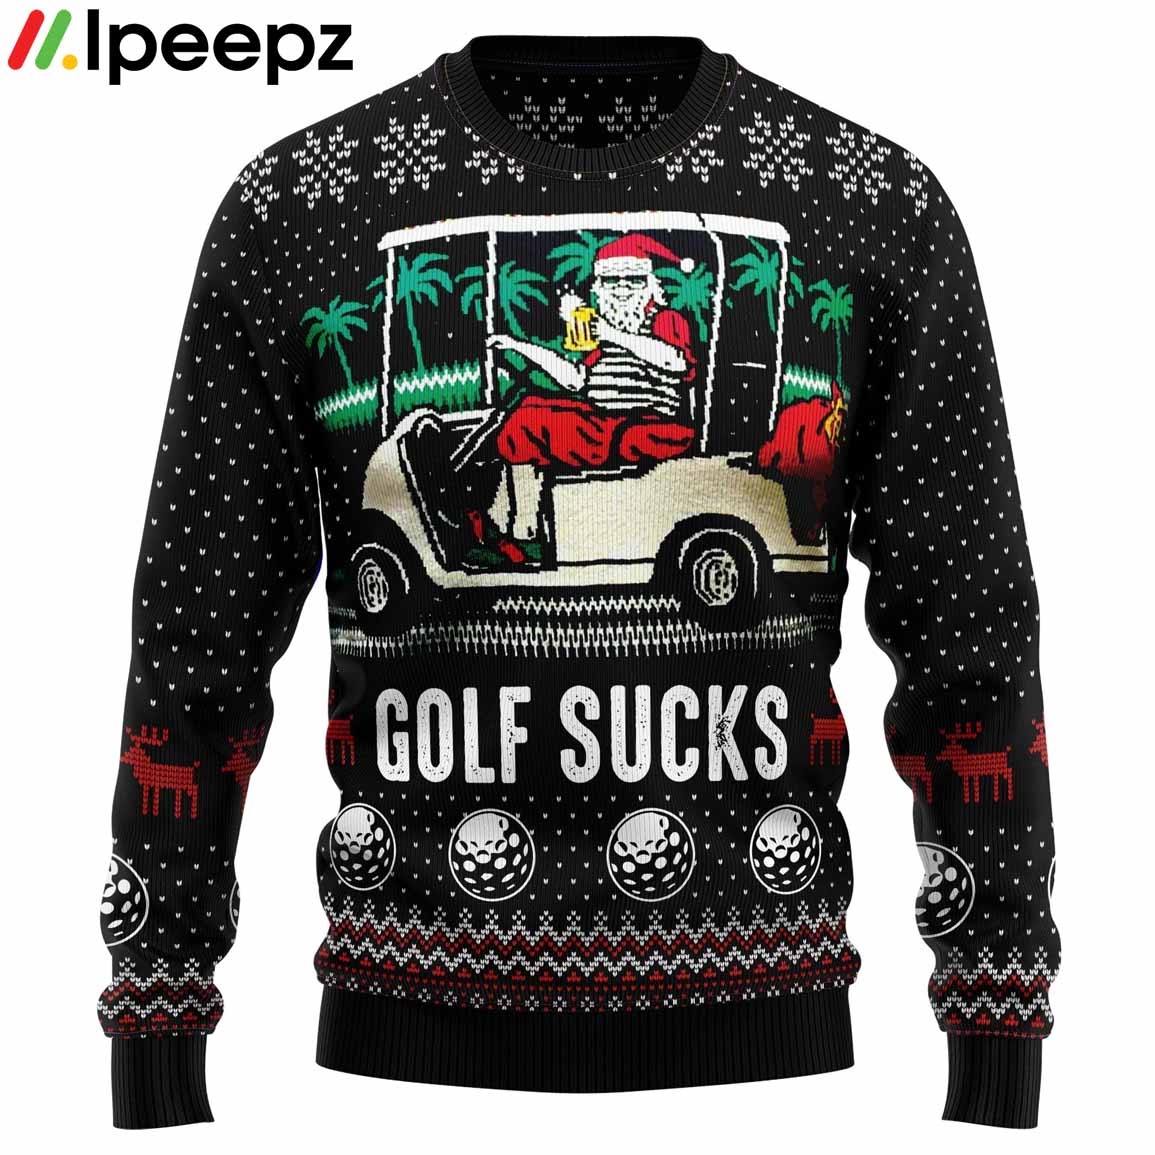 Golf Sucks Ugly Christmas Sweater